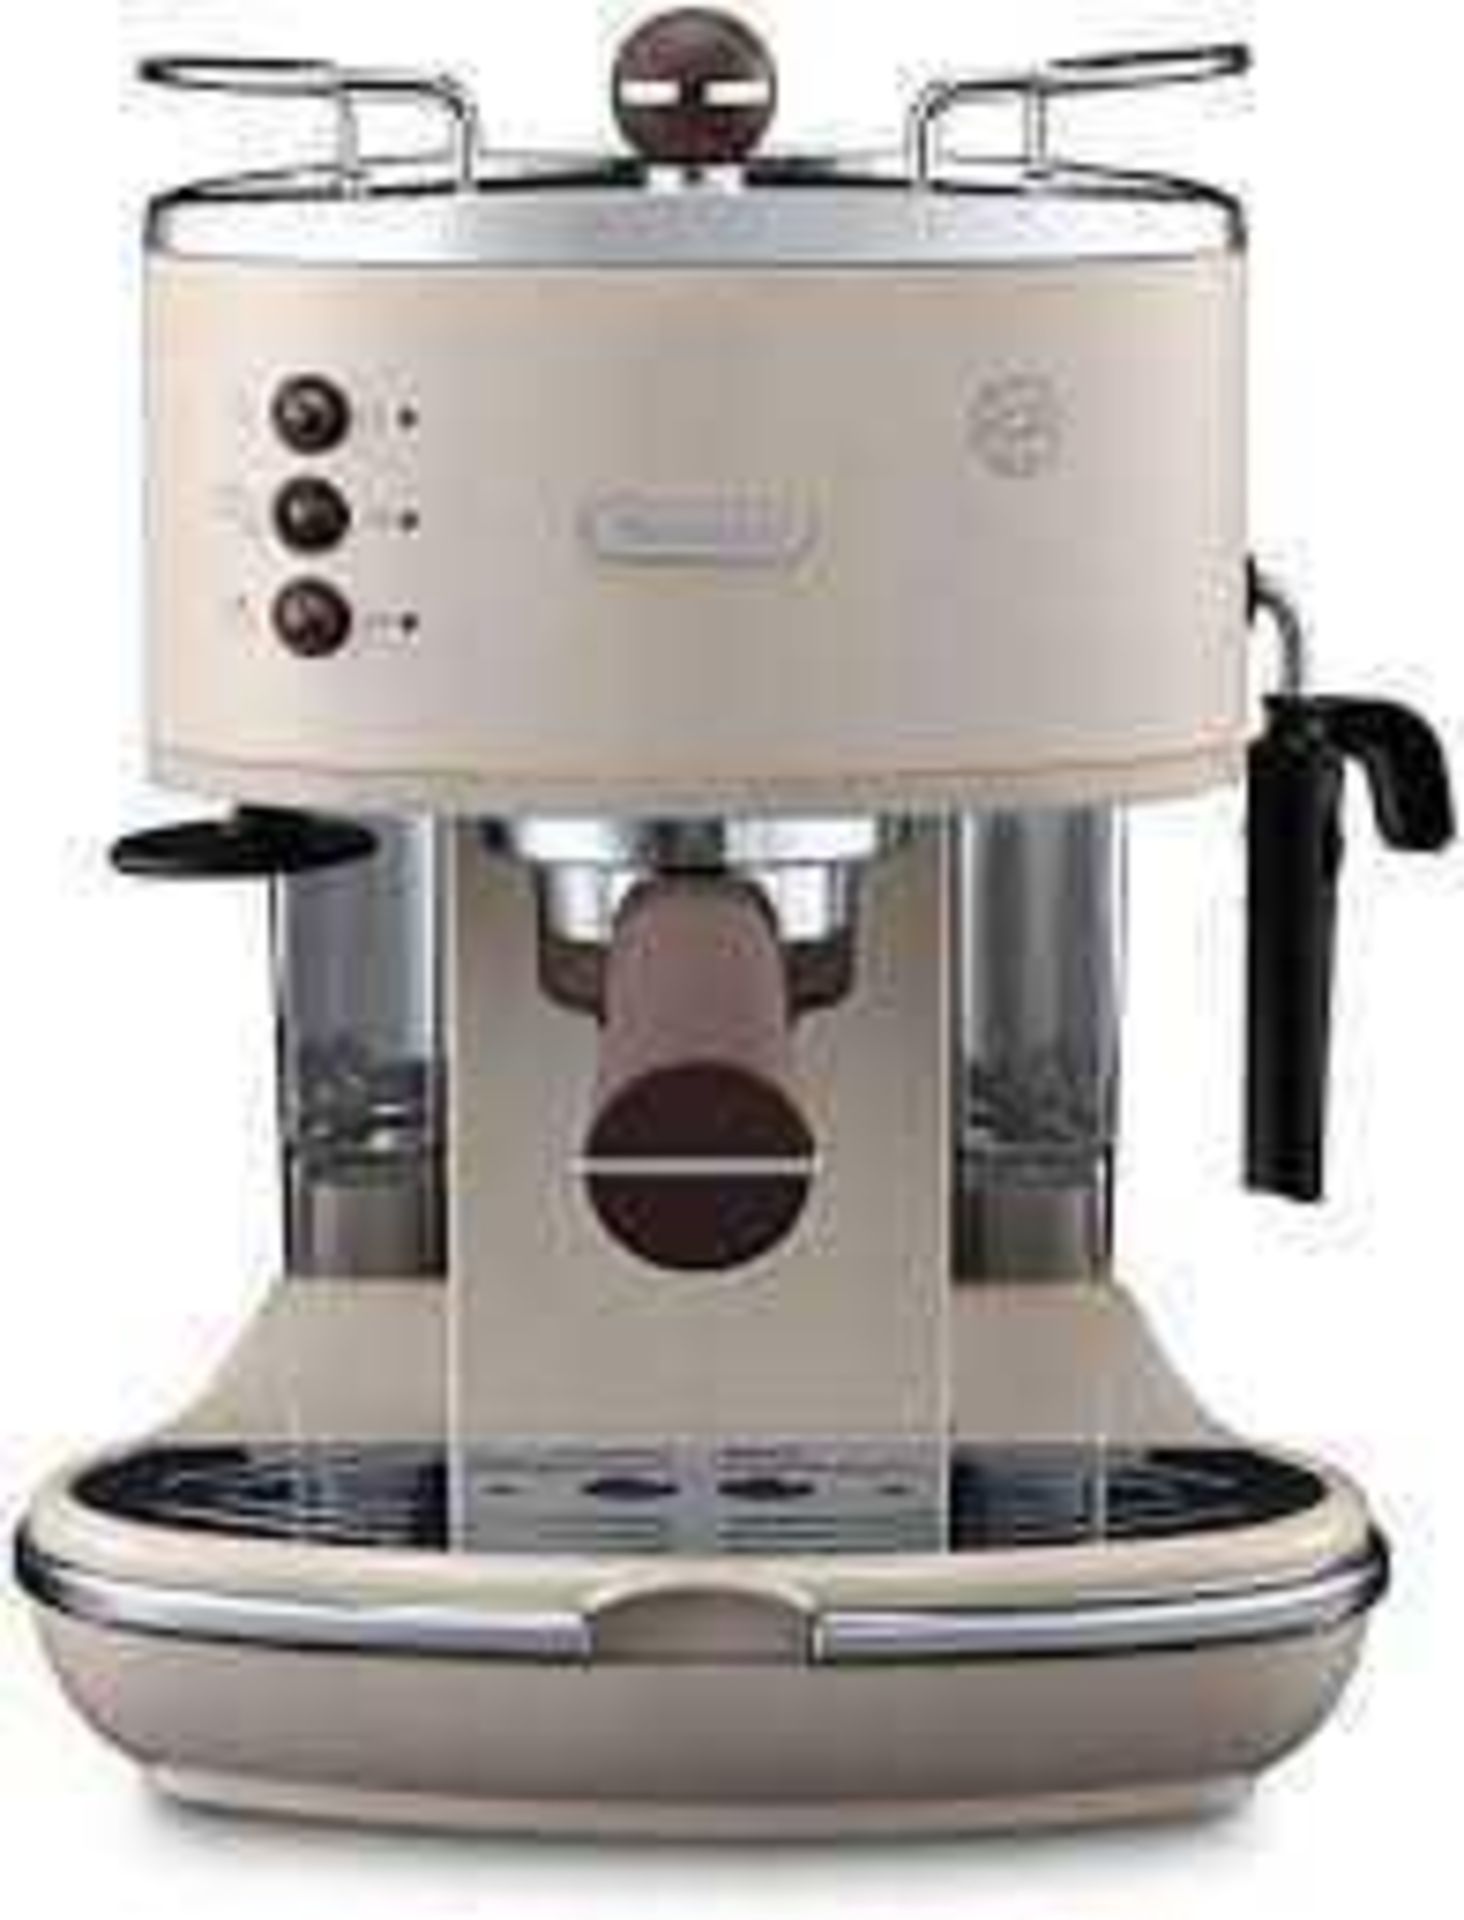 RRP £150 Boxed Delonghi Icona Vintage Espresso And Cappuccino Coffee Maker - Image 2 of 2